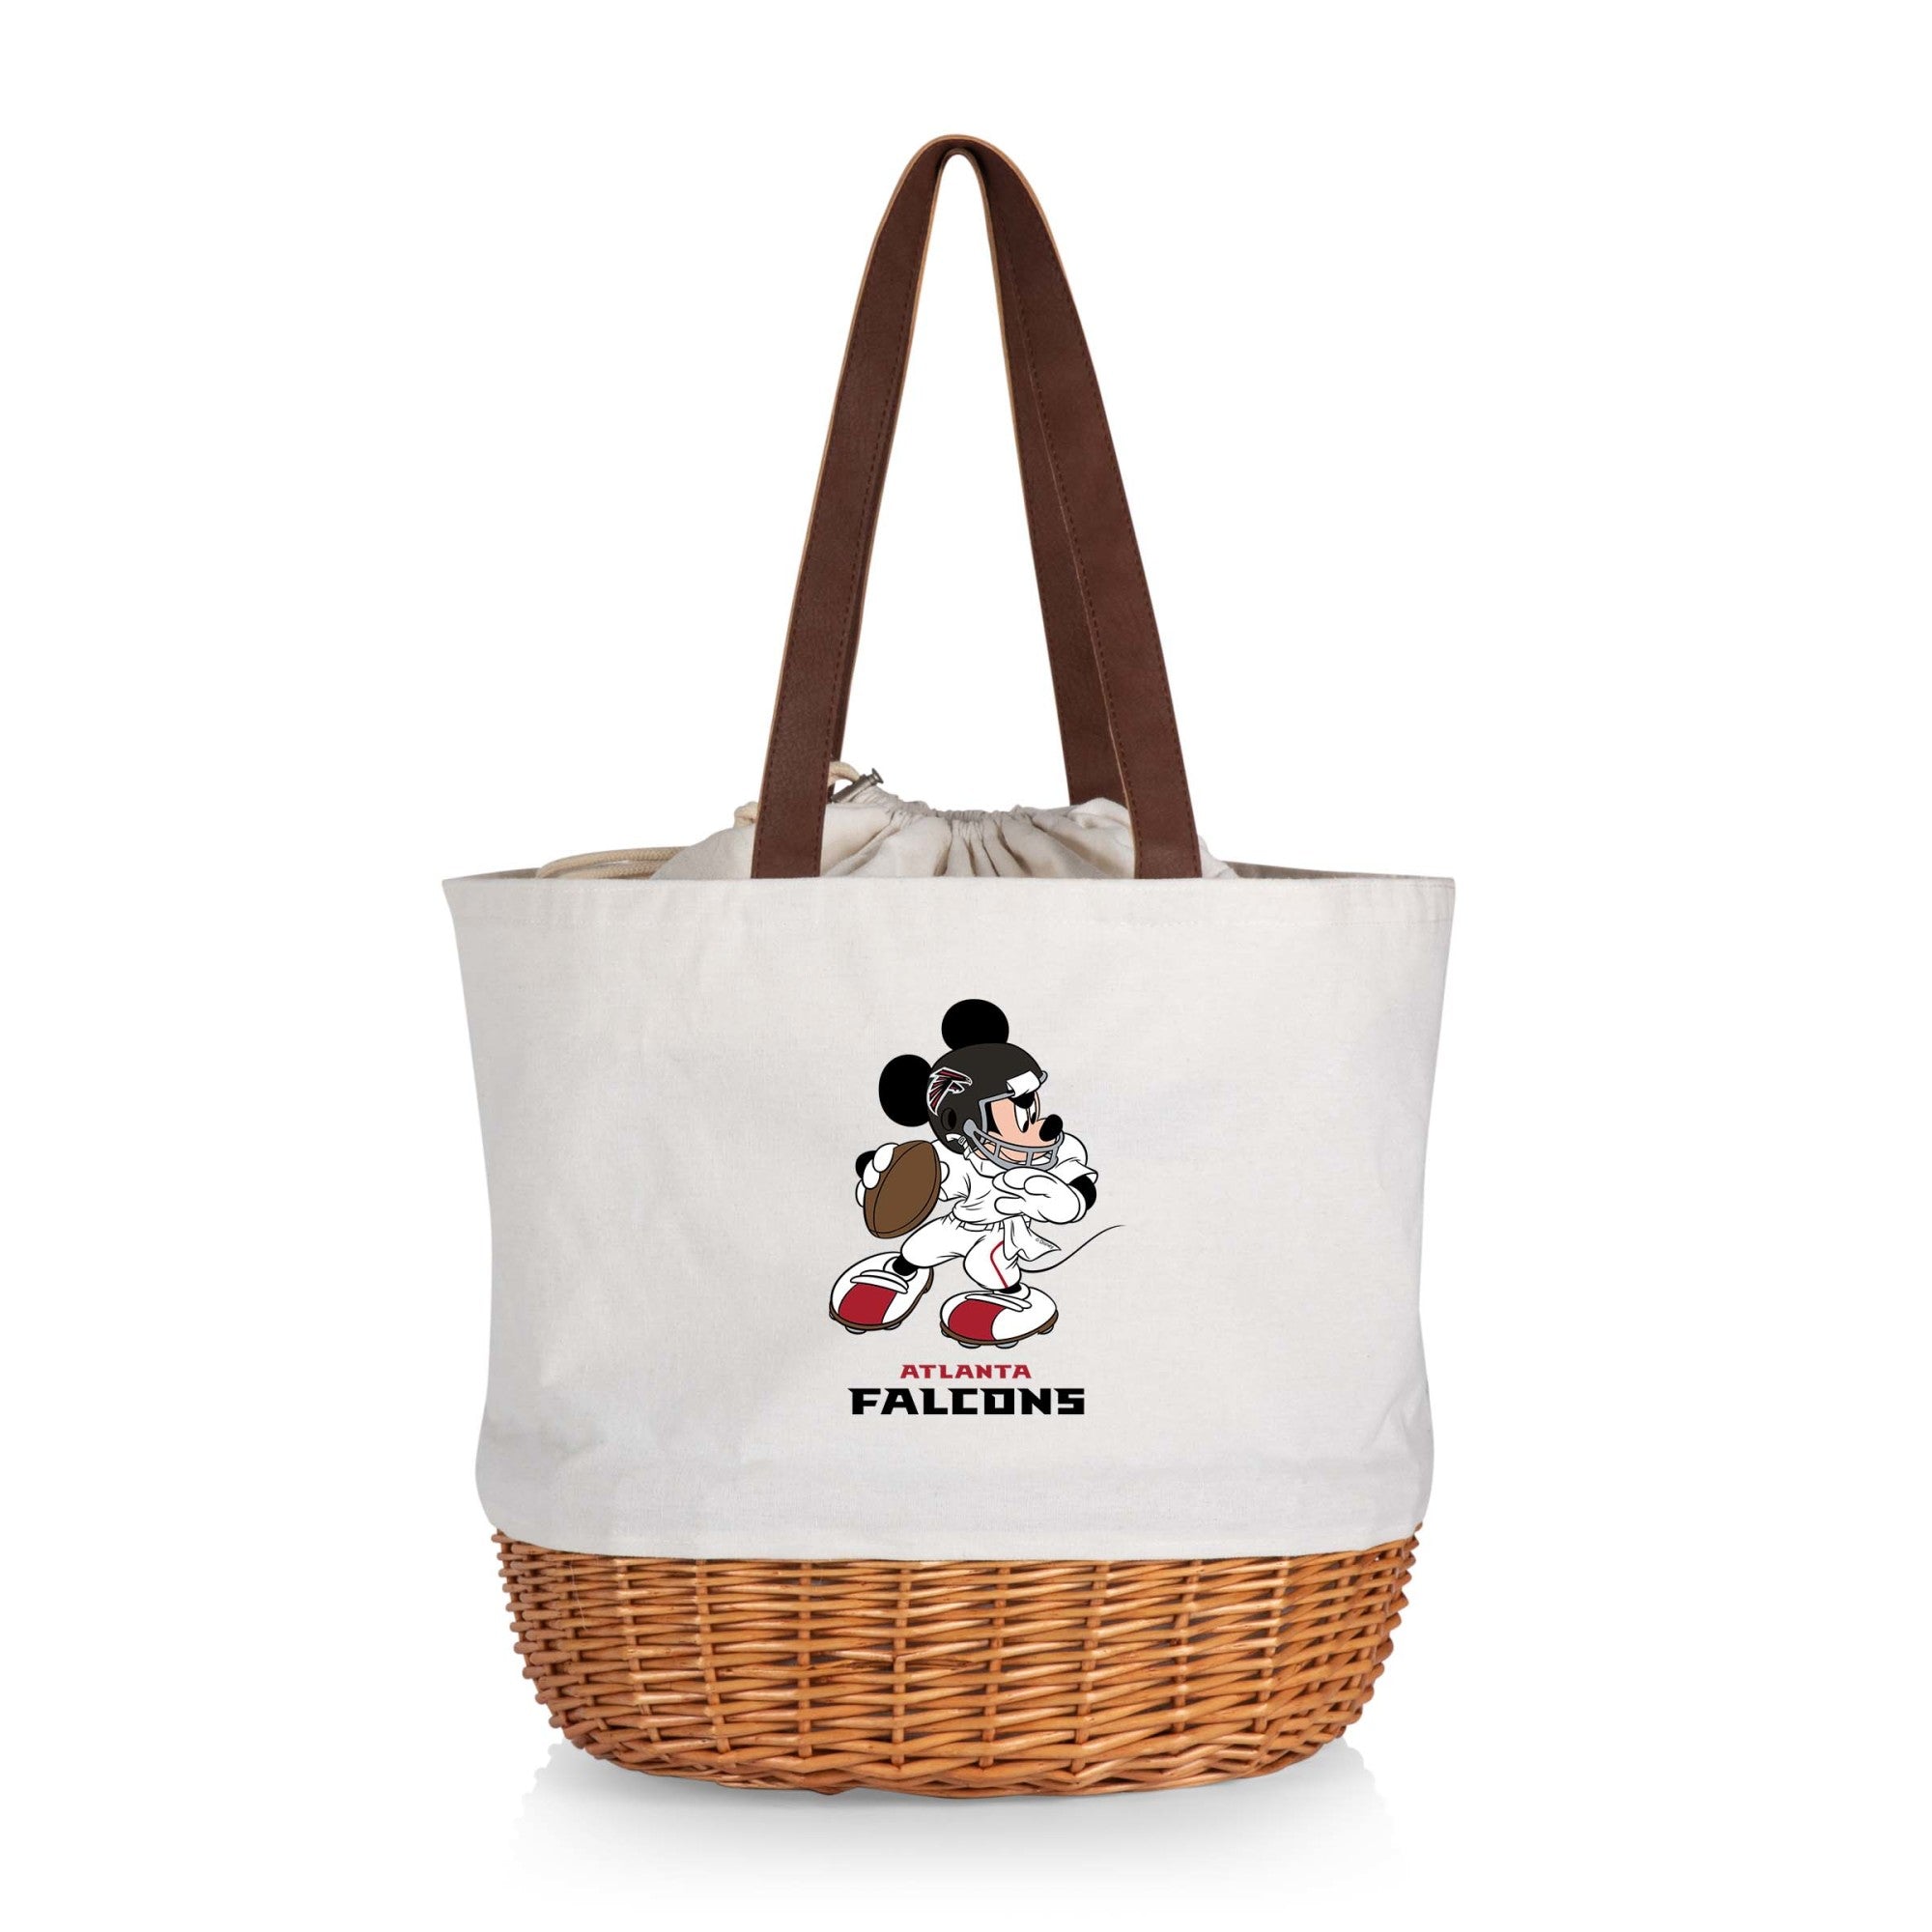 Mickey Mouse - Atlanta Falcons - Coronado Canvas and Willow Basket Tote